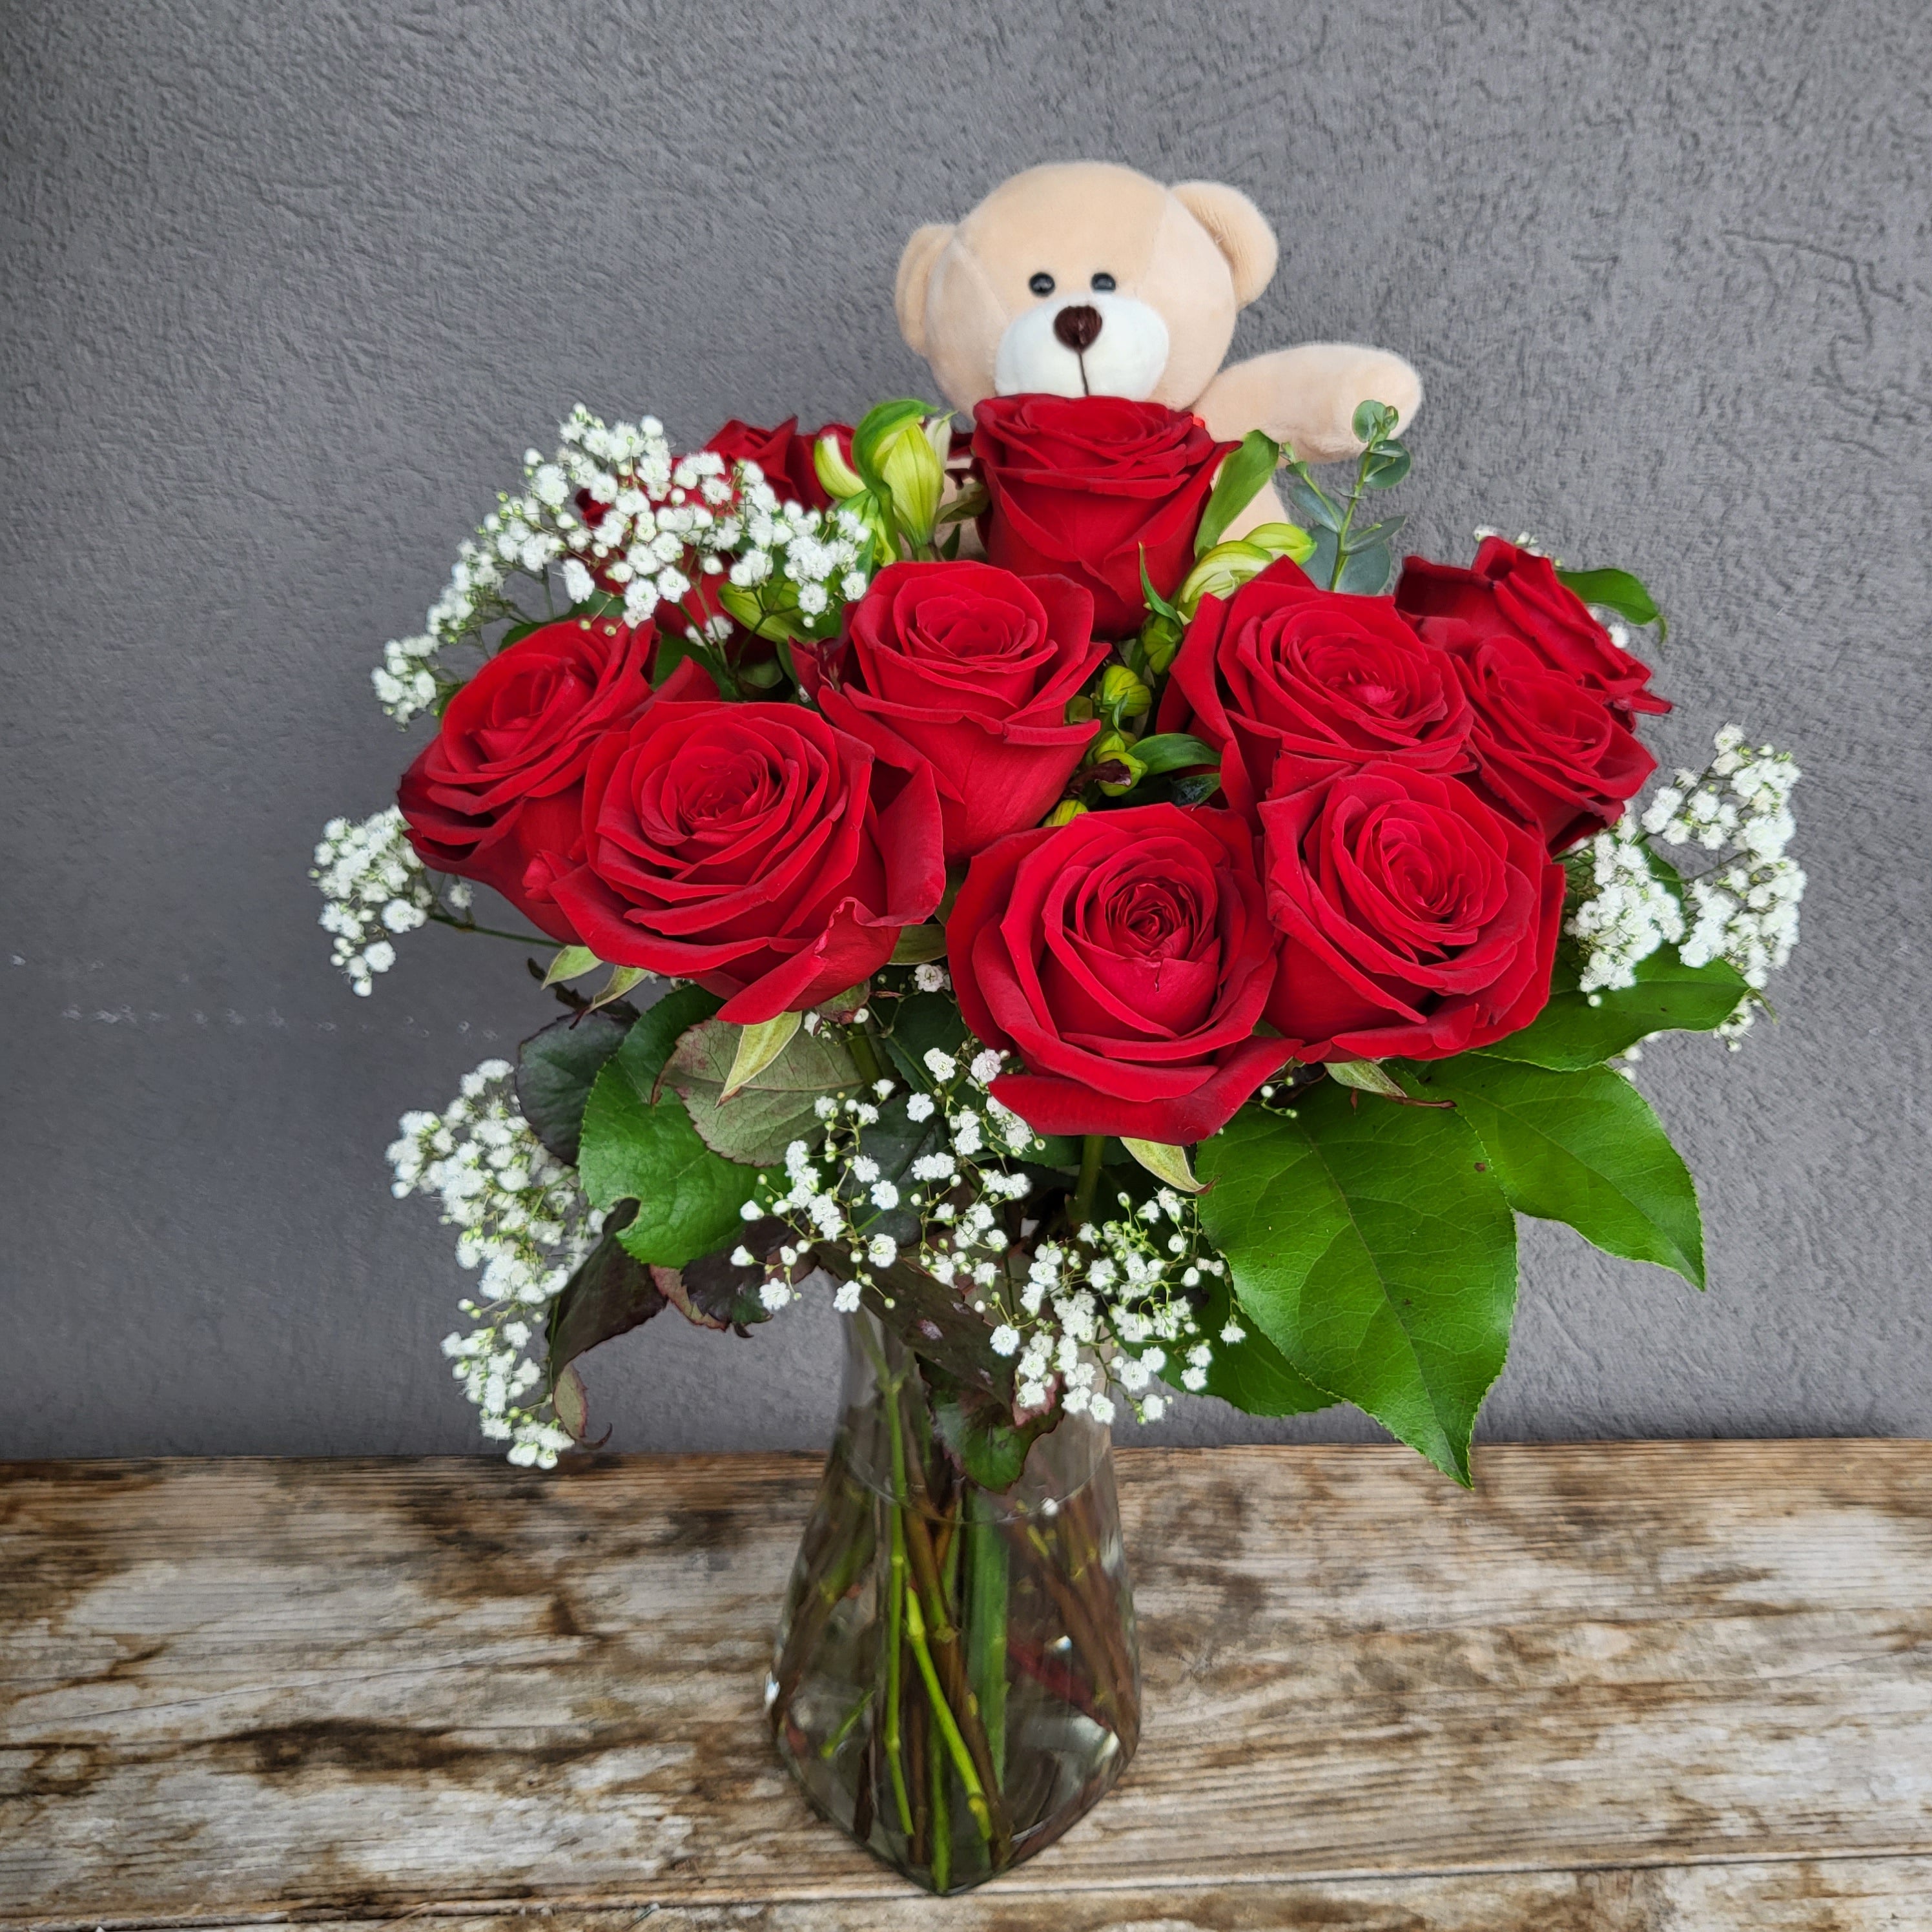 HC-171 Roses vase with Teddy Bear